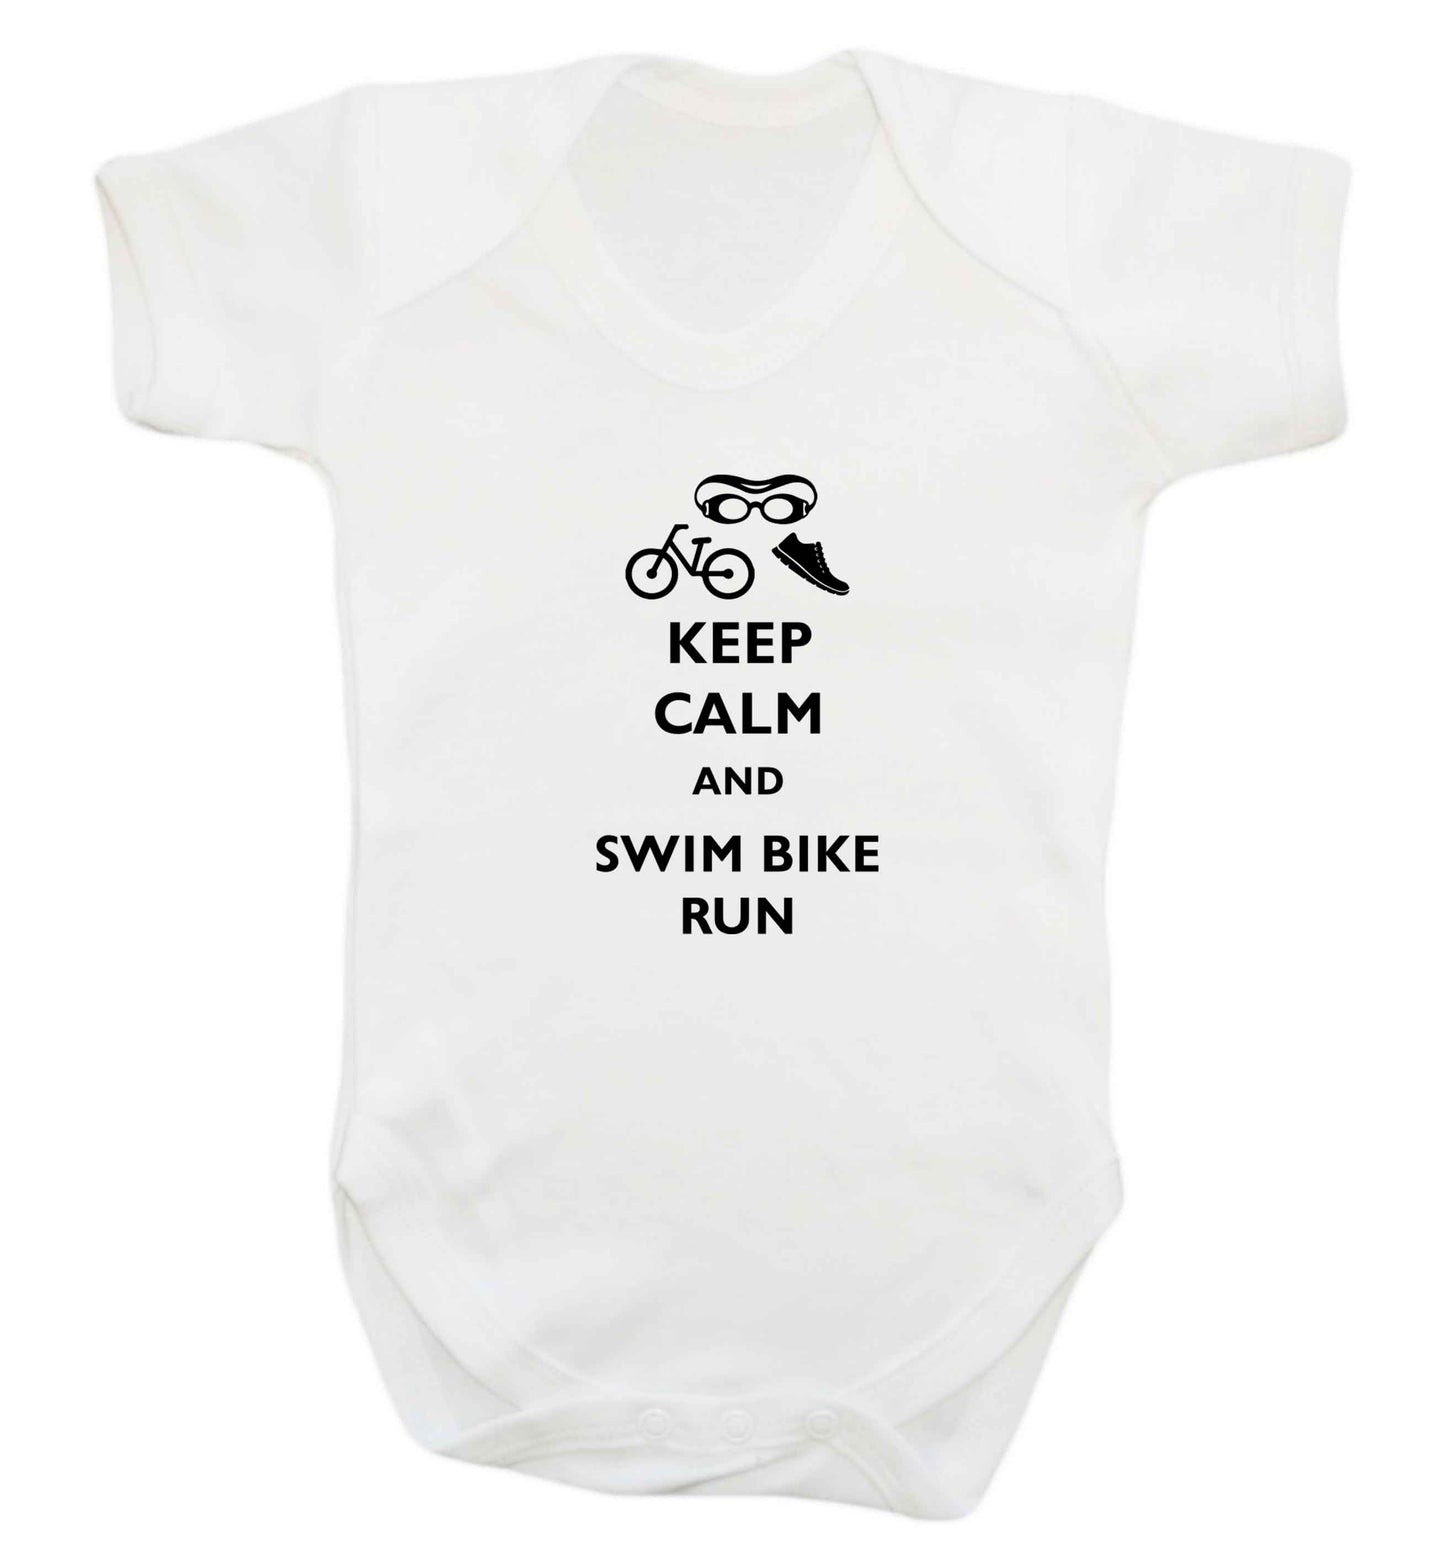 Keep calm and swim bike run baby vest white 18-24 months